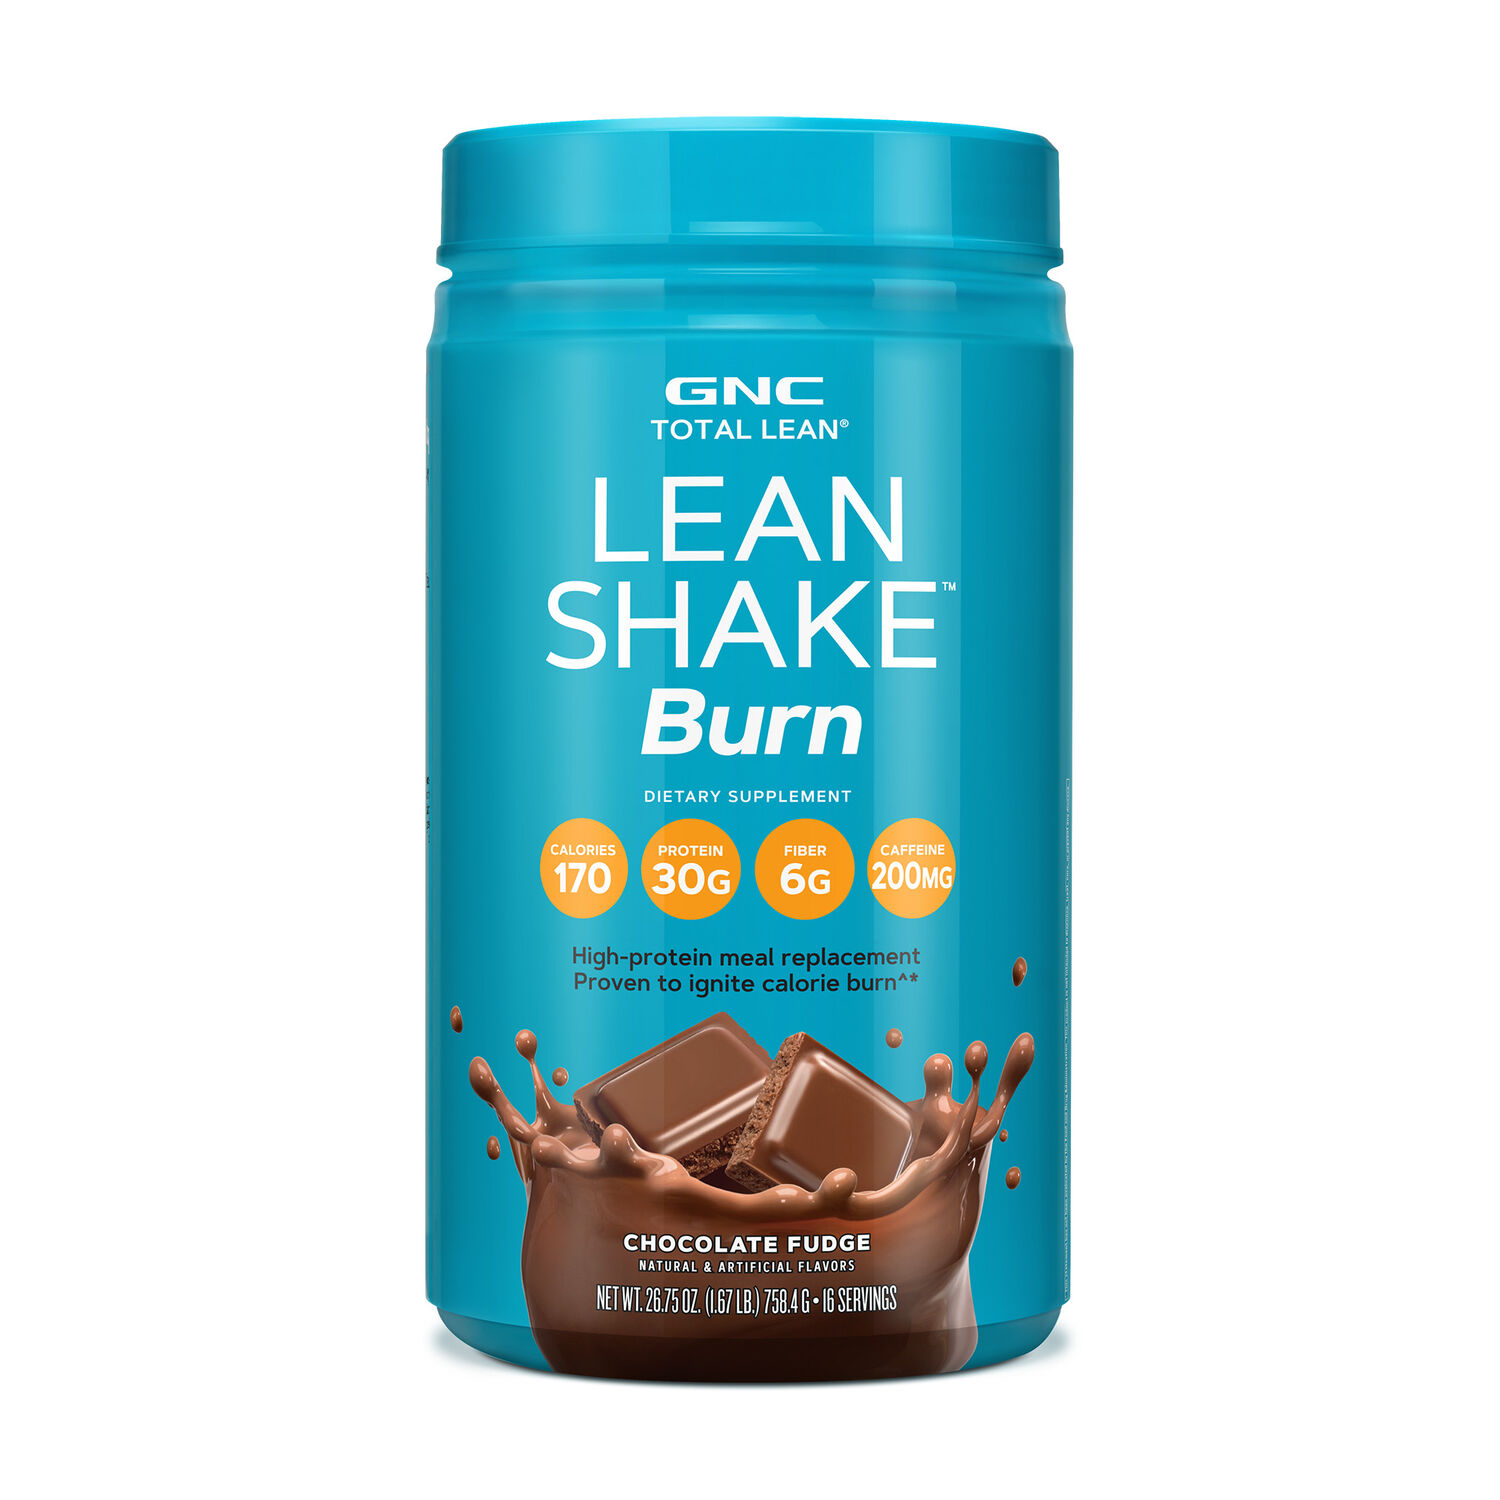 GNC Total Lean Lean Shake Burn - Chocolate Fudge (16 Servings) - 1.67 lbs.